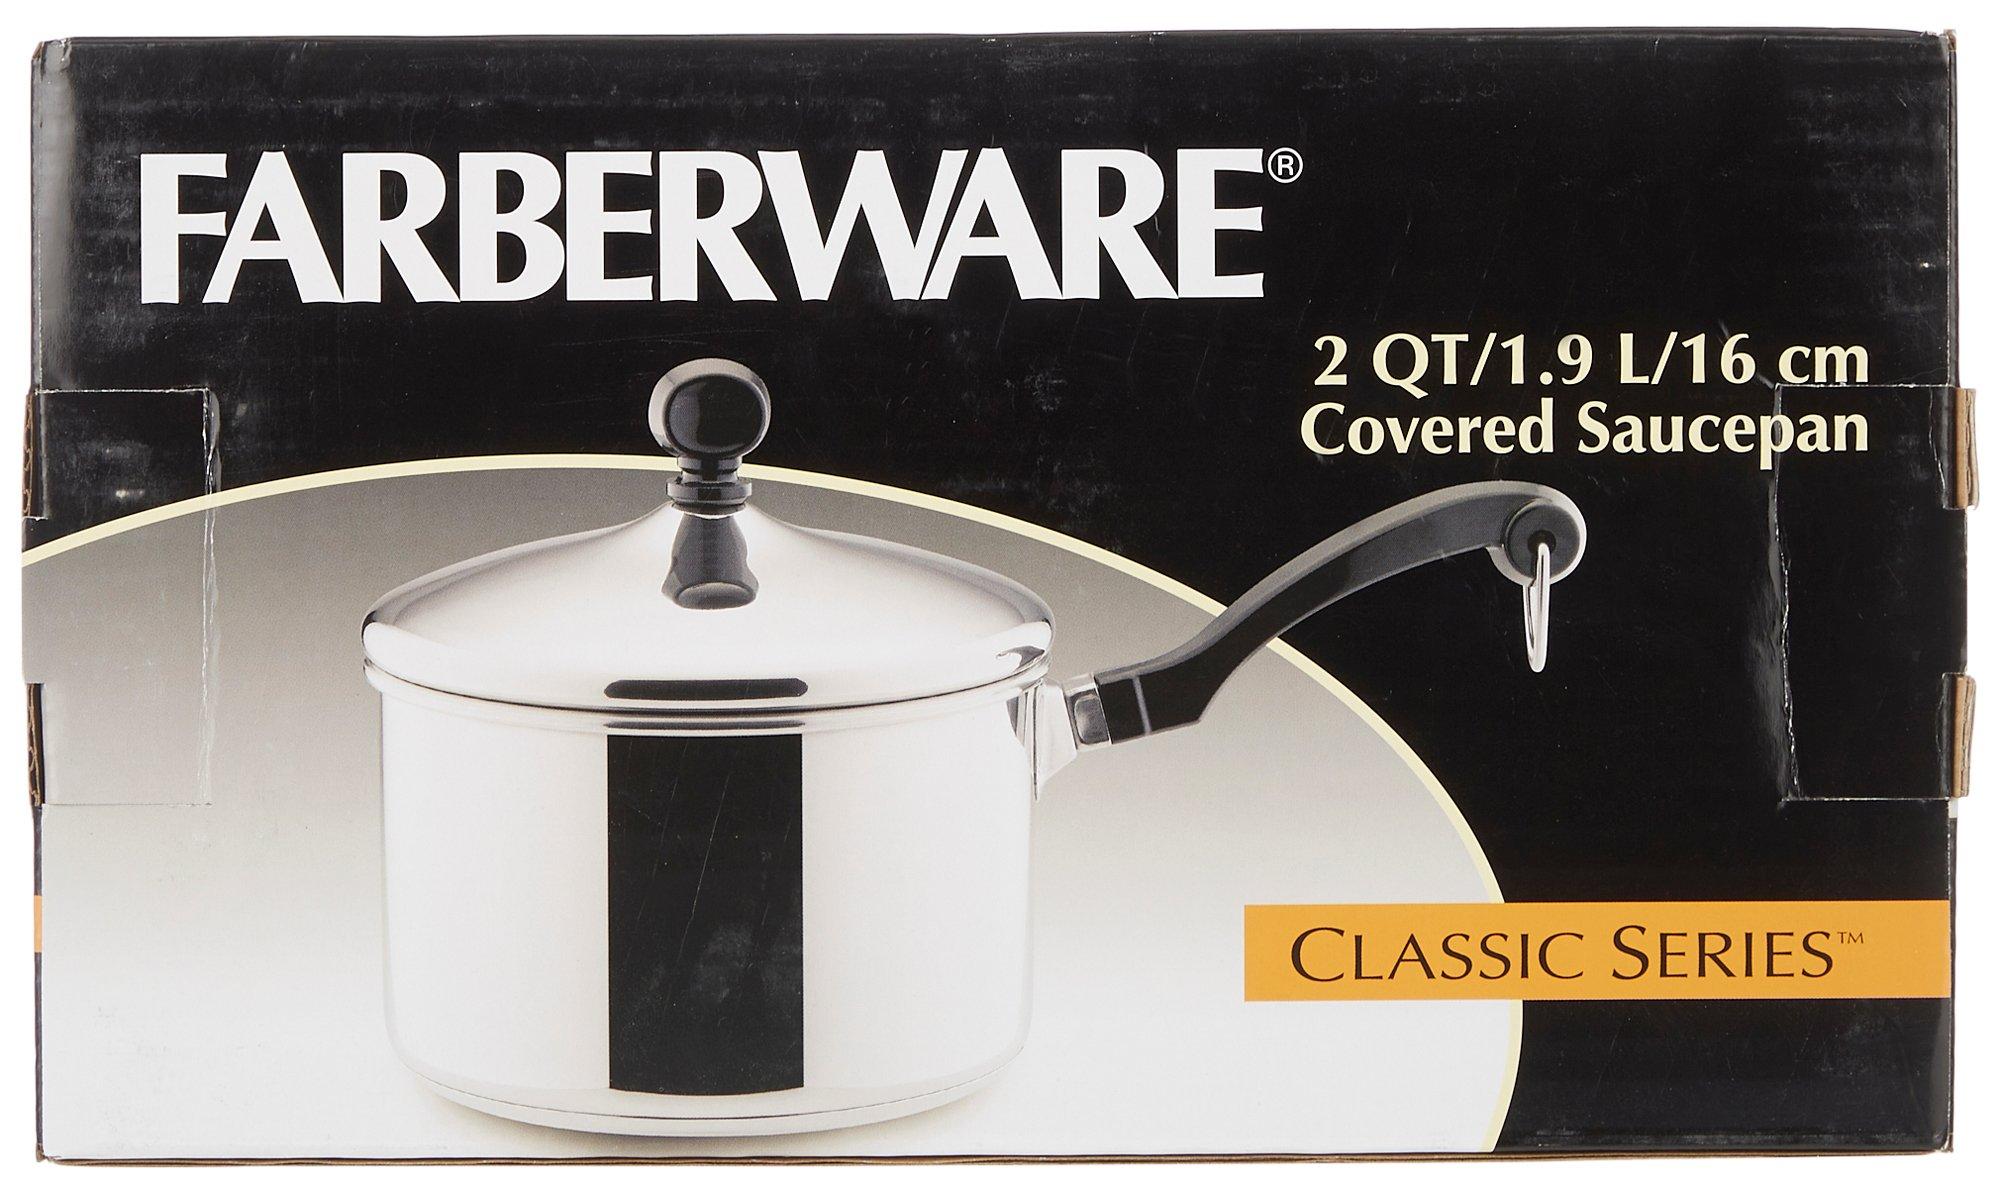 Farberware Classic Series - 4 Quart Covered Saucepot 